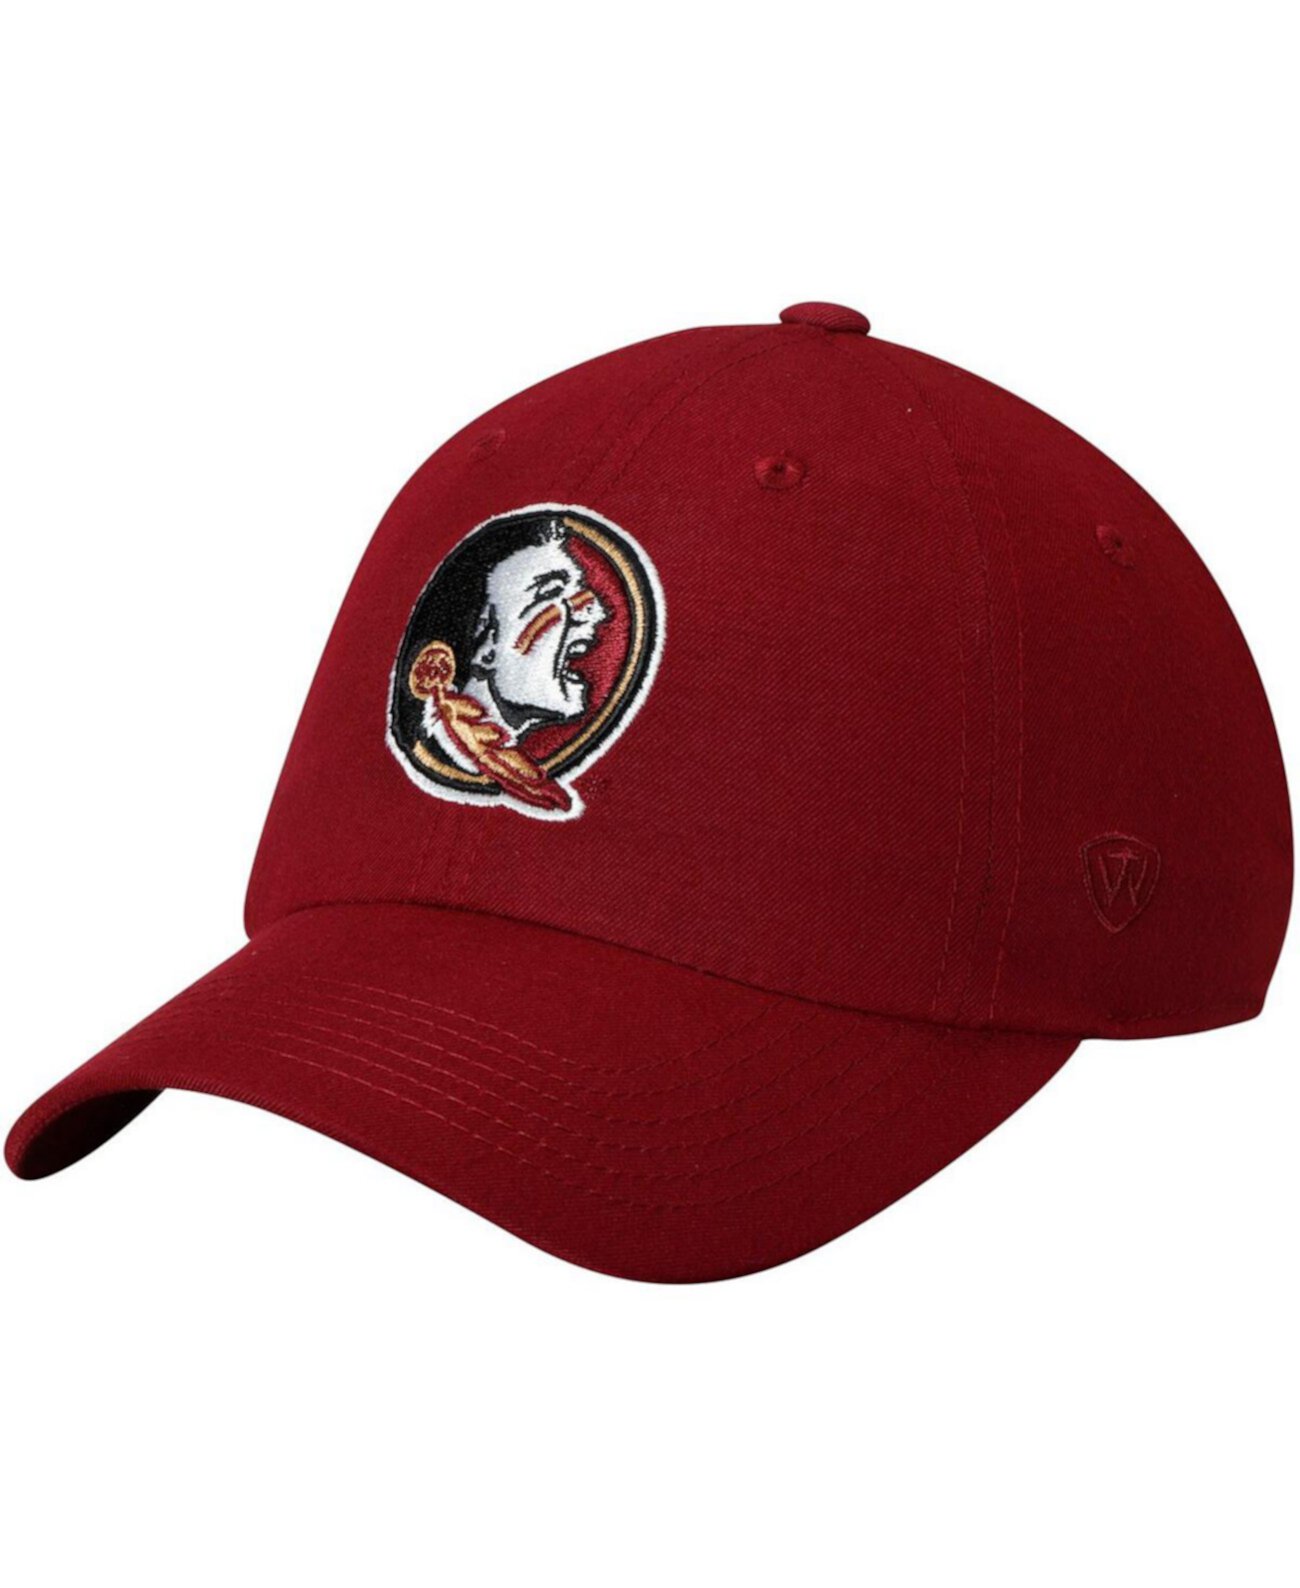 Мужская регулируемая шляпа Garnet Florida State Seminoles Primary с логотипом из штапеля Top of the World